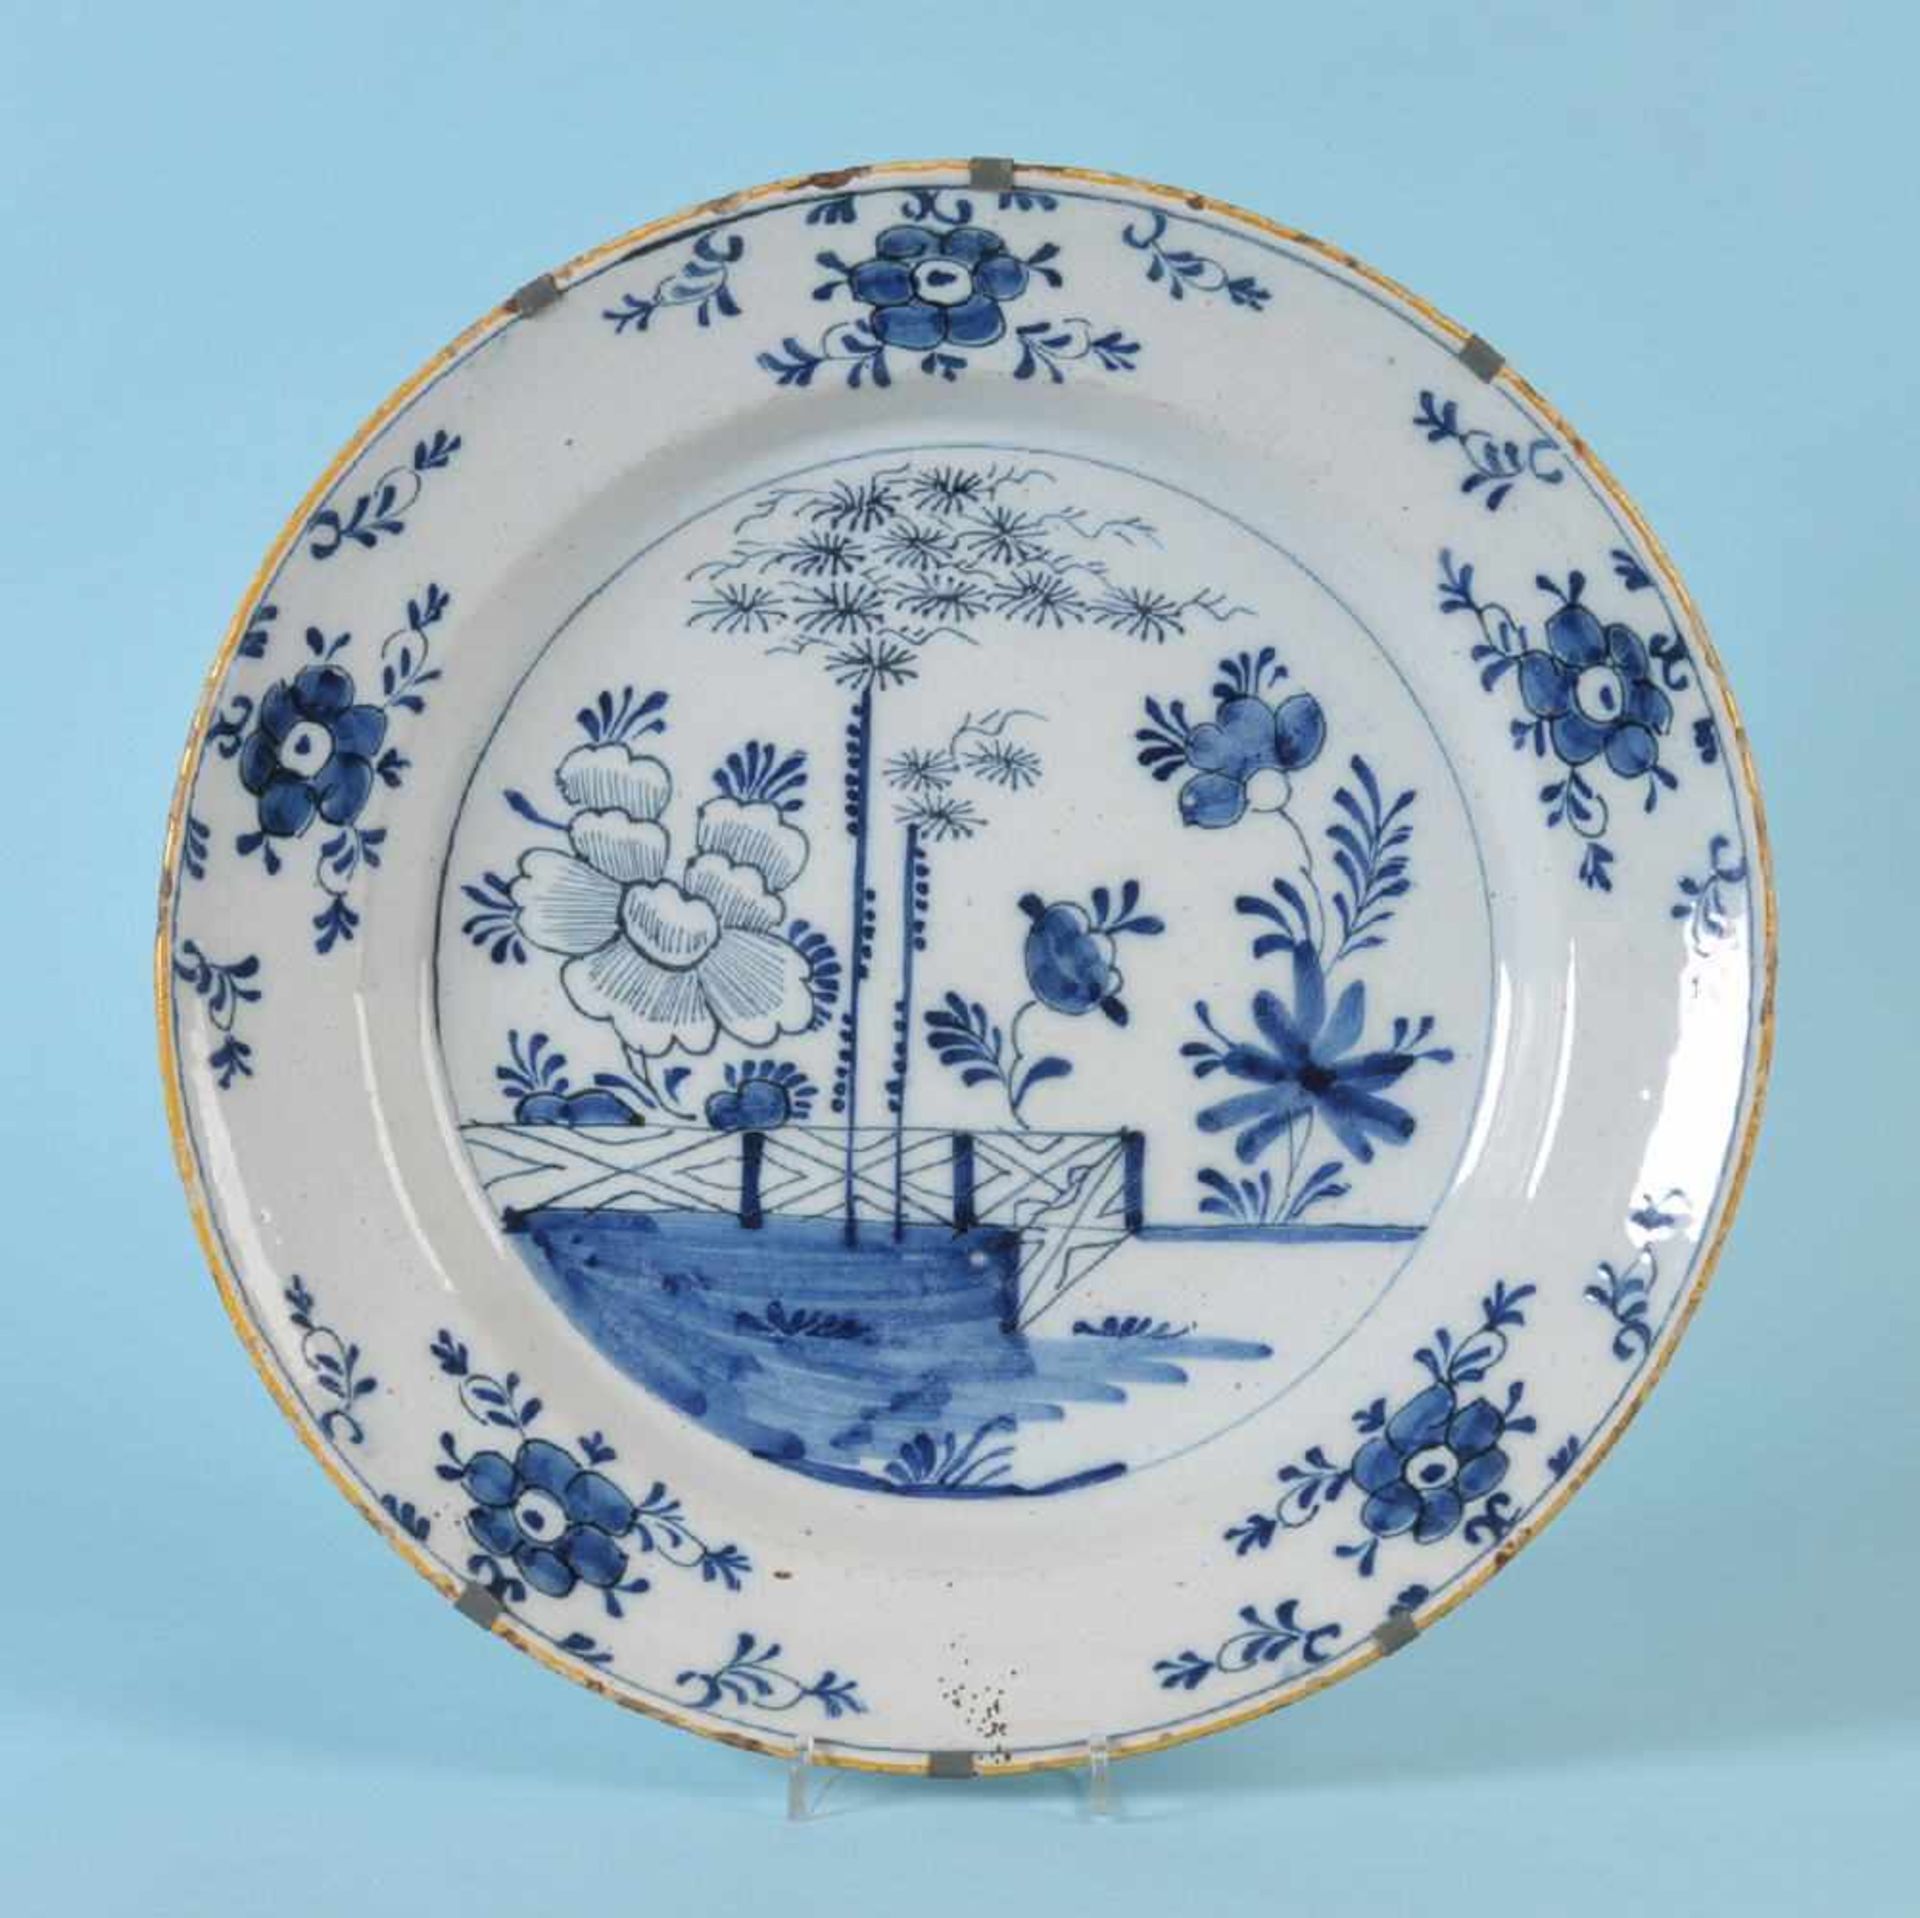 PlatteFayence, beige Glasur, handbemalt, blaues Blumendekor, D= 35,5 cm, wohl Delft, 18. Jh., Rand